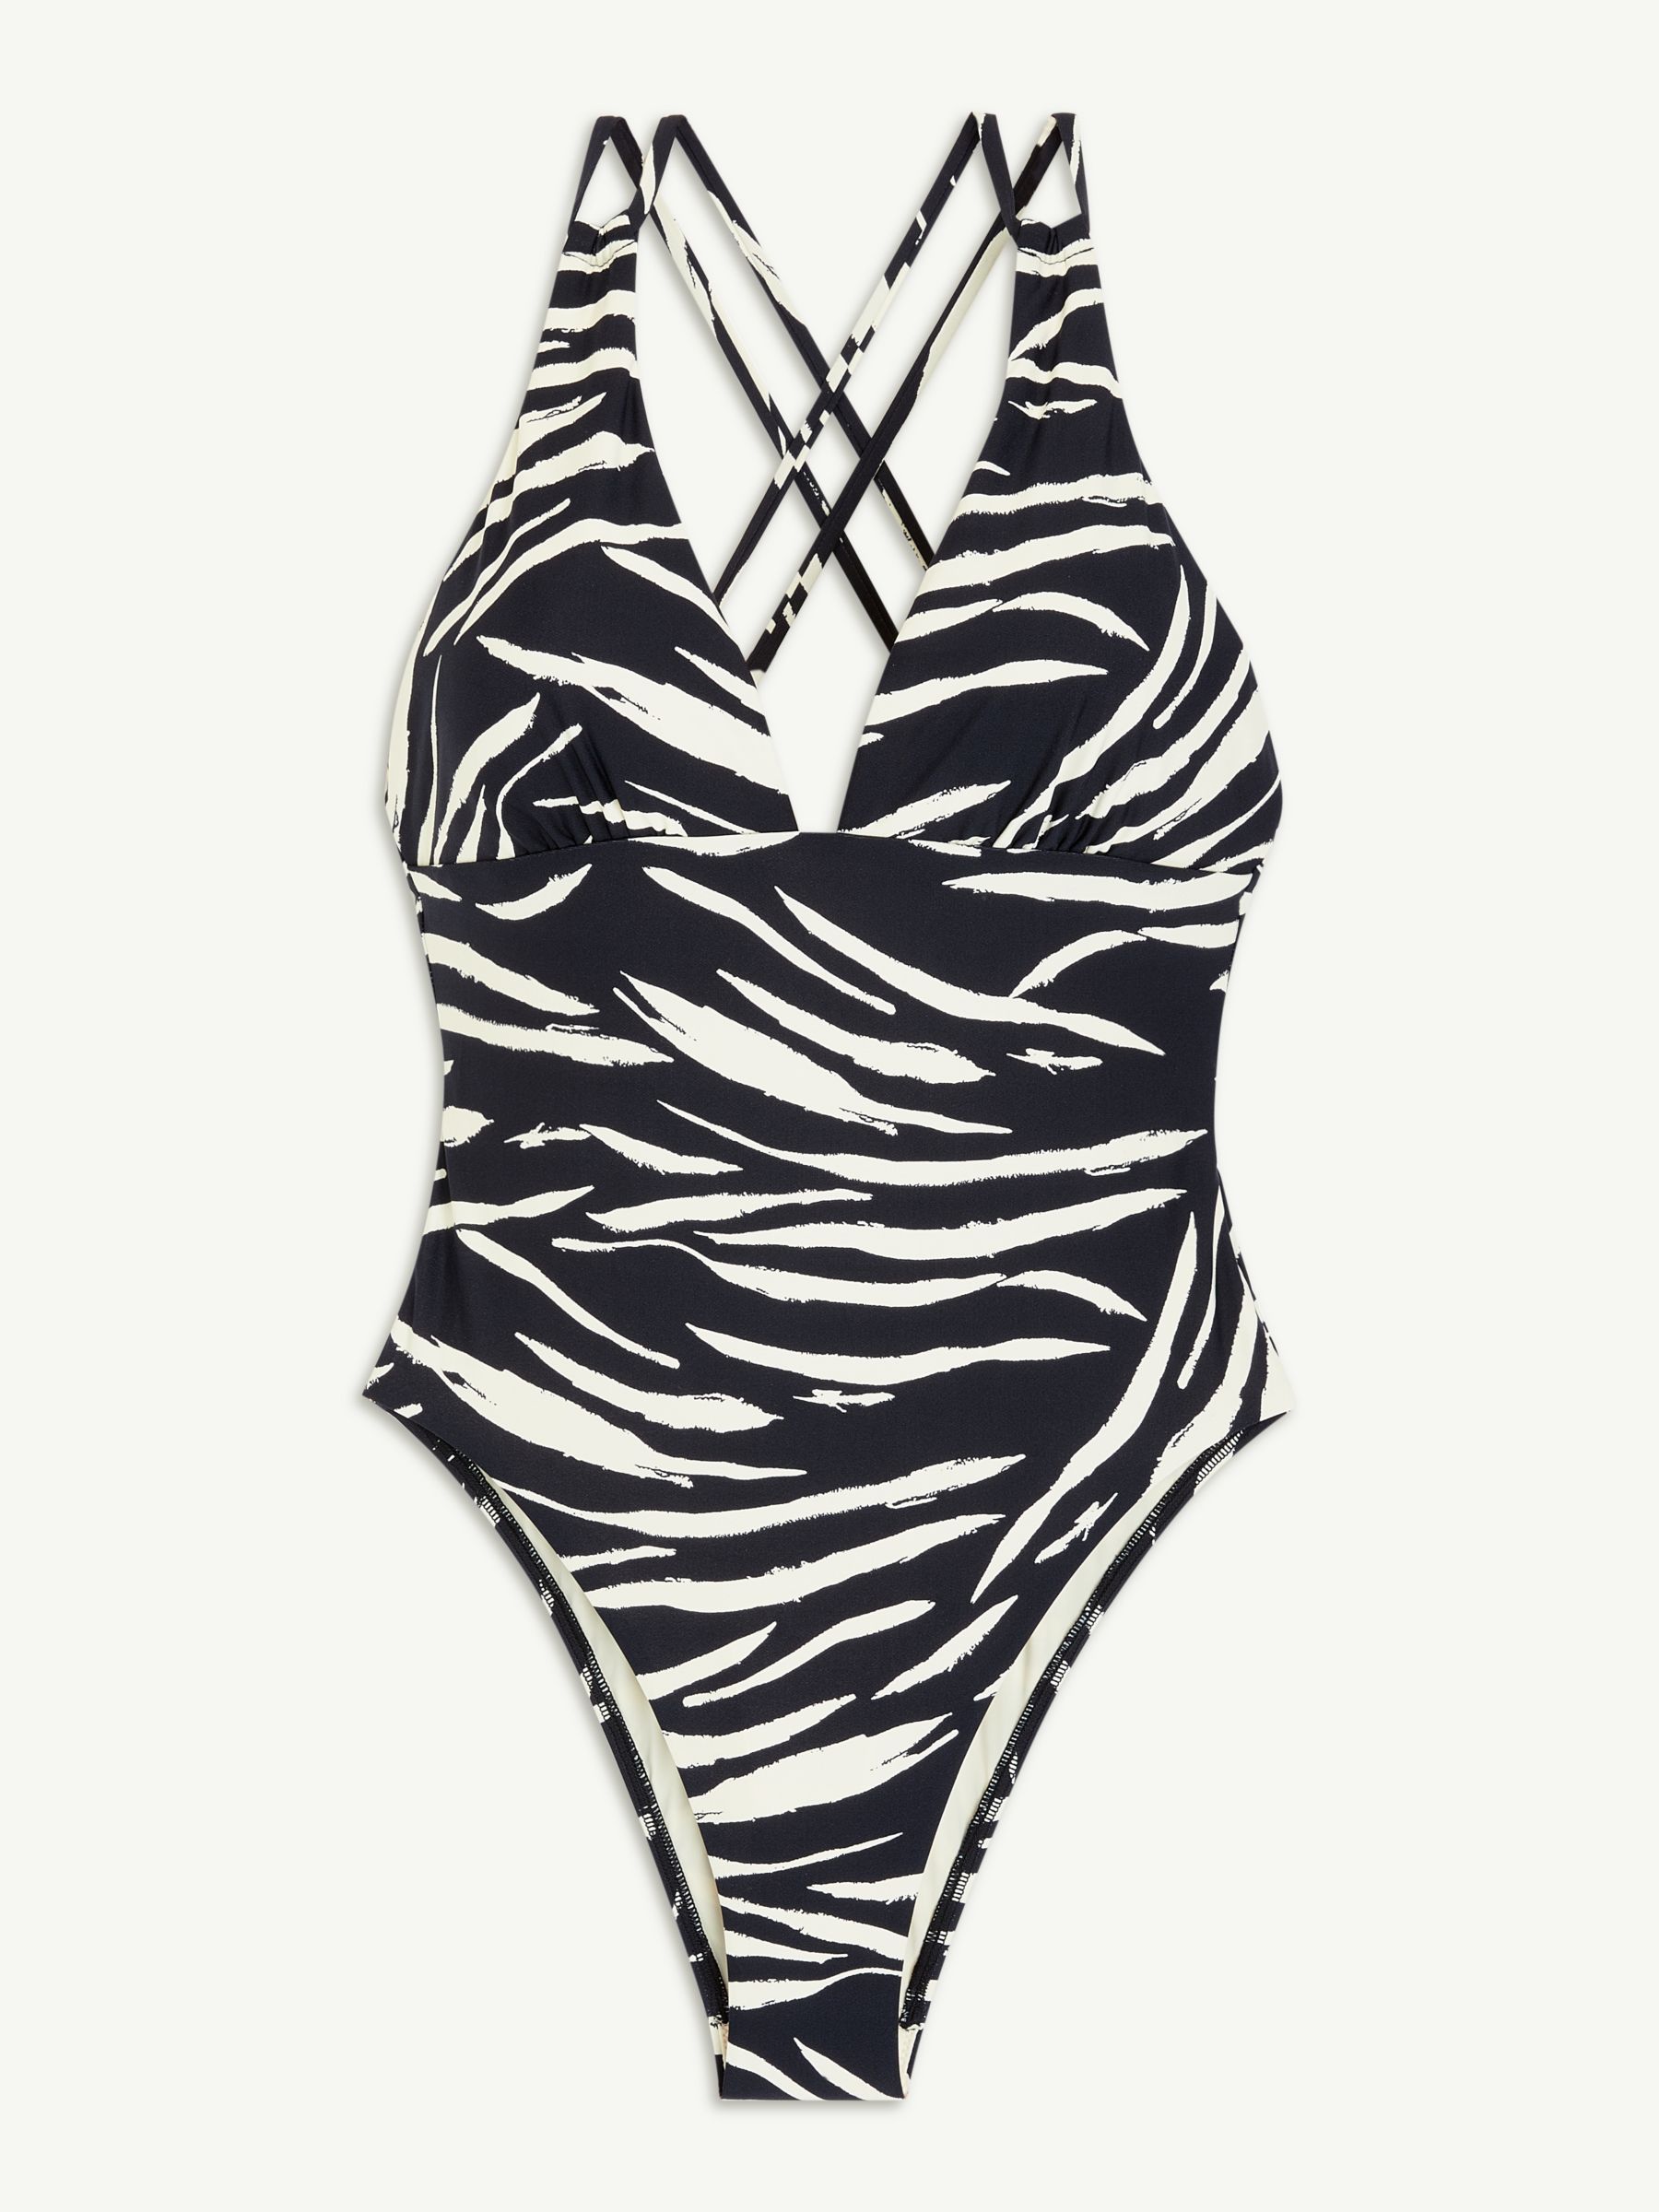 Seafolly Zebra Skin Deep Deep V One Piece Swimsuit, Black/White